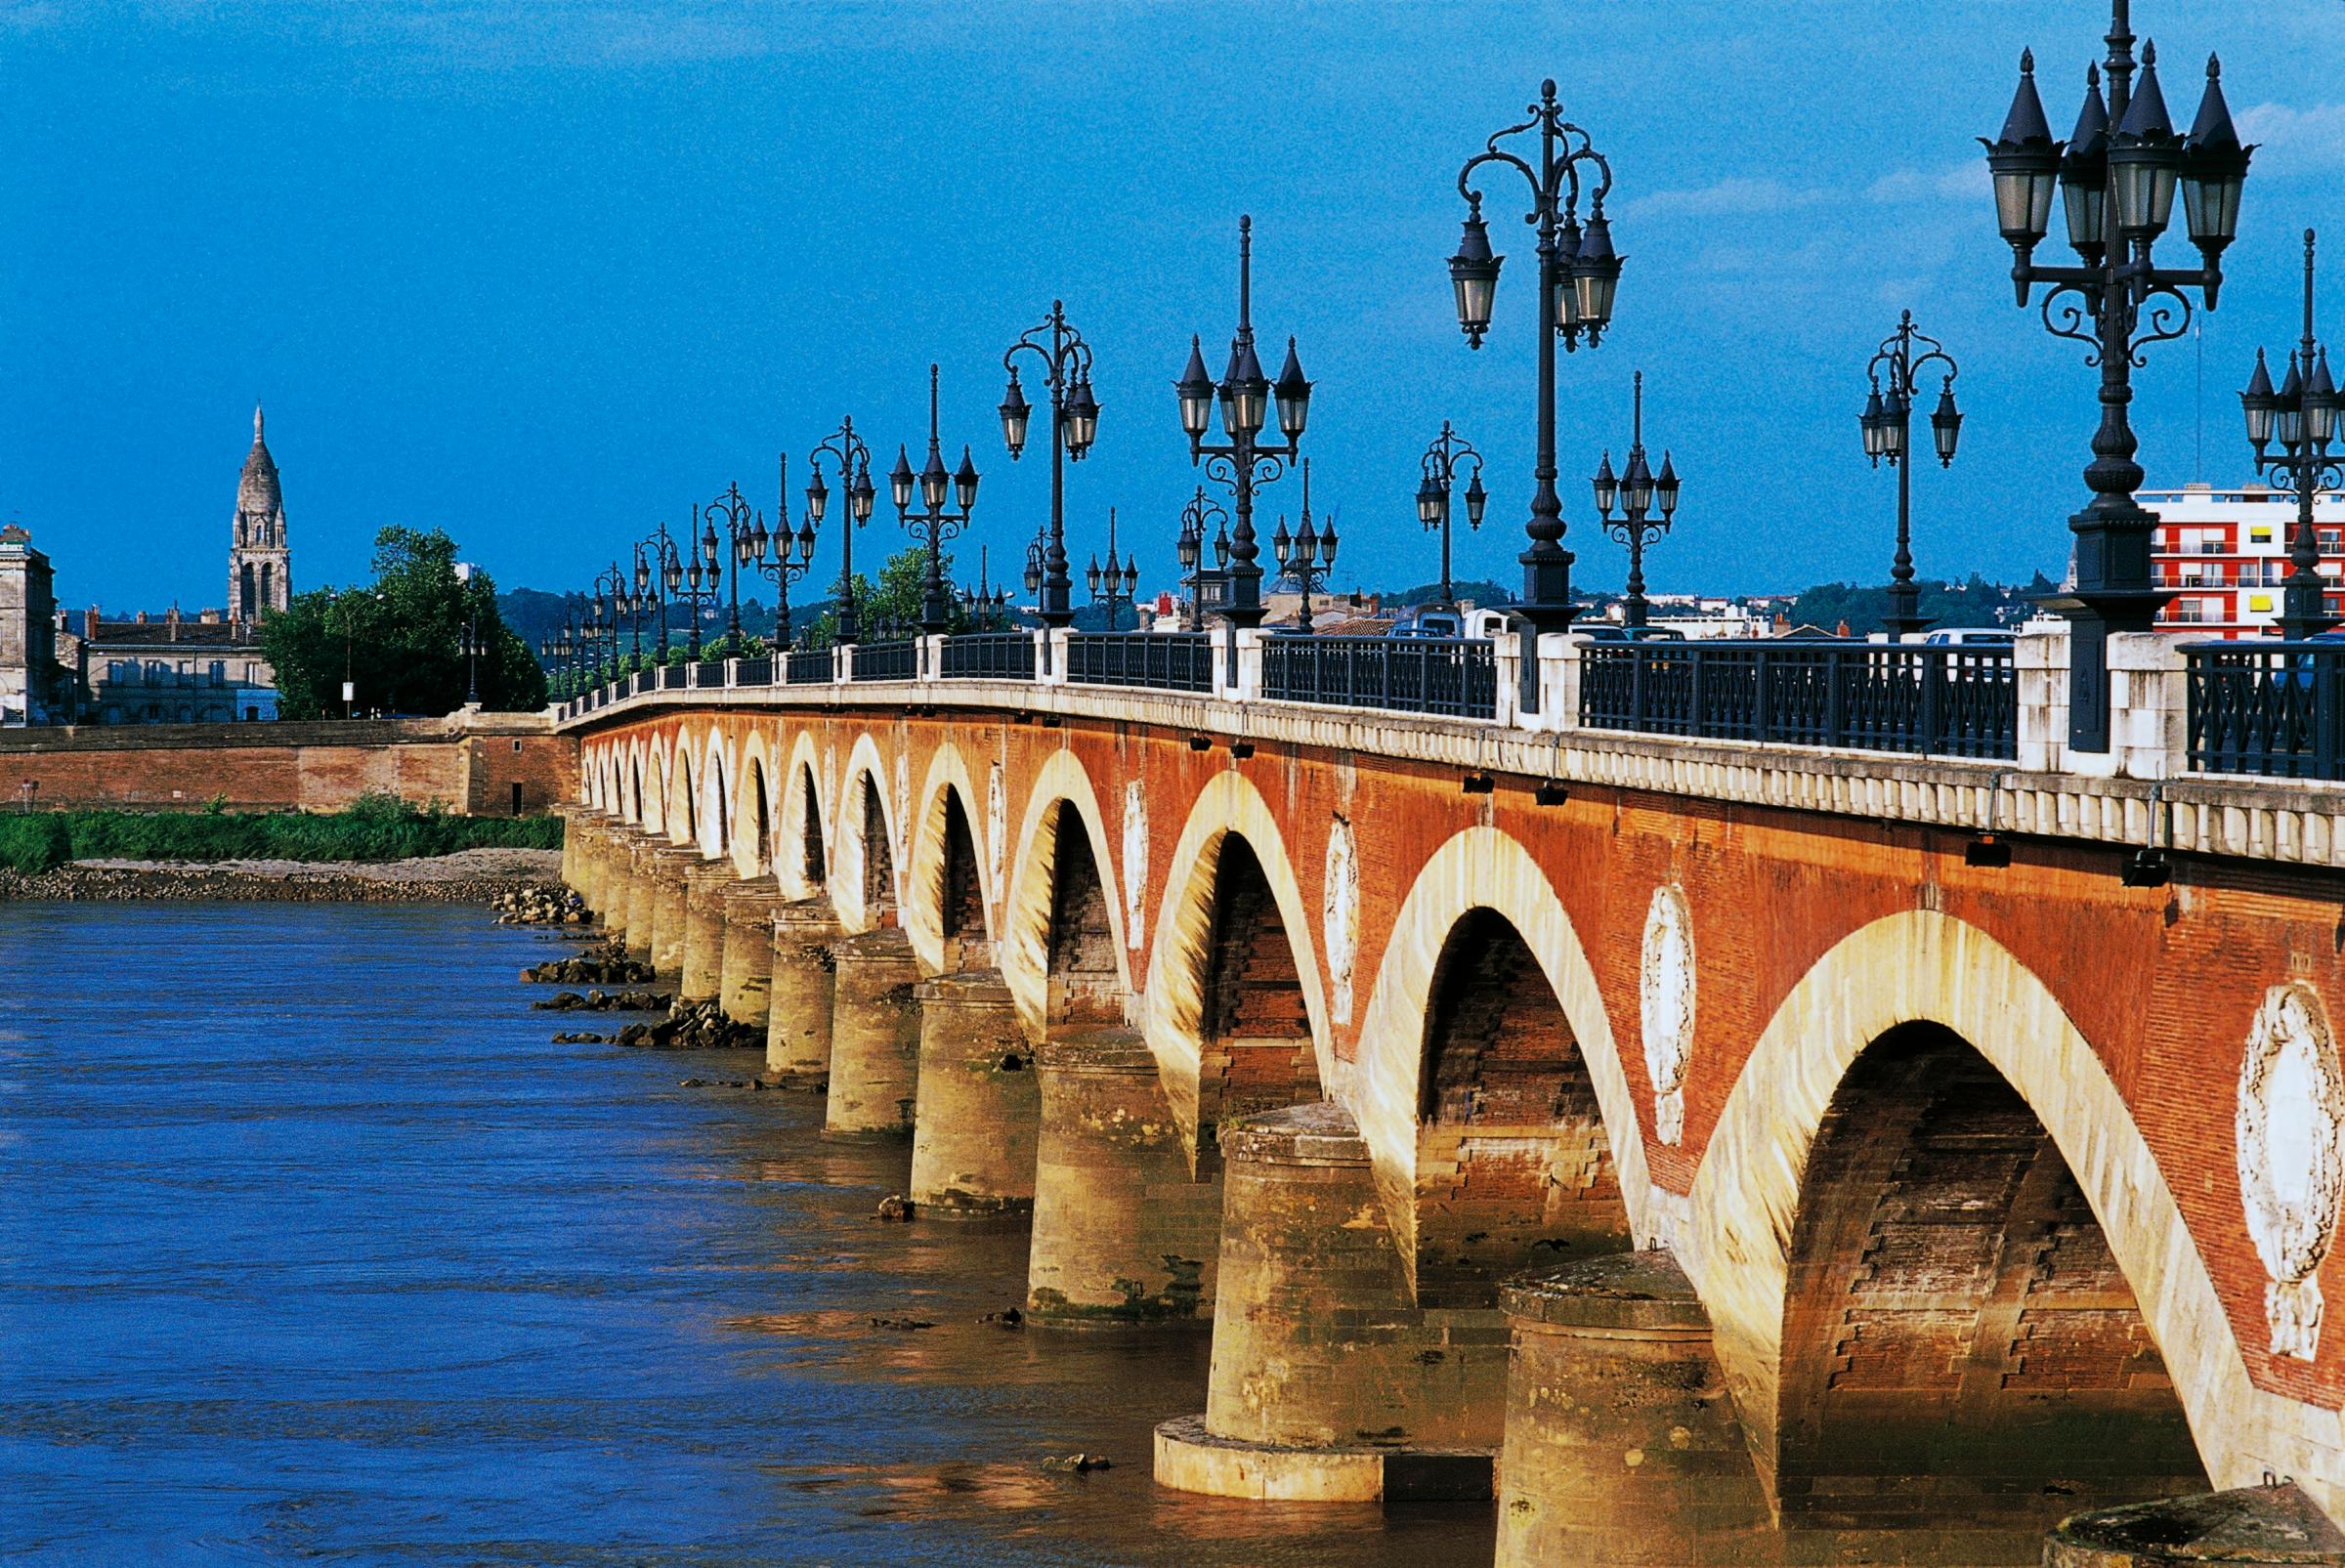 The Stone Bridge (Pont de Pierre) on the Garonne